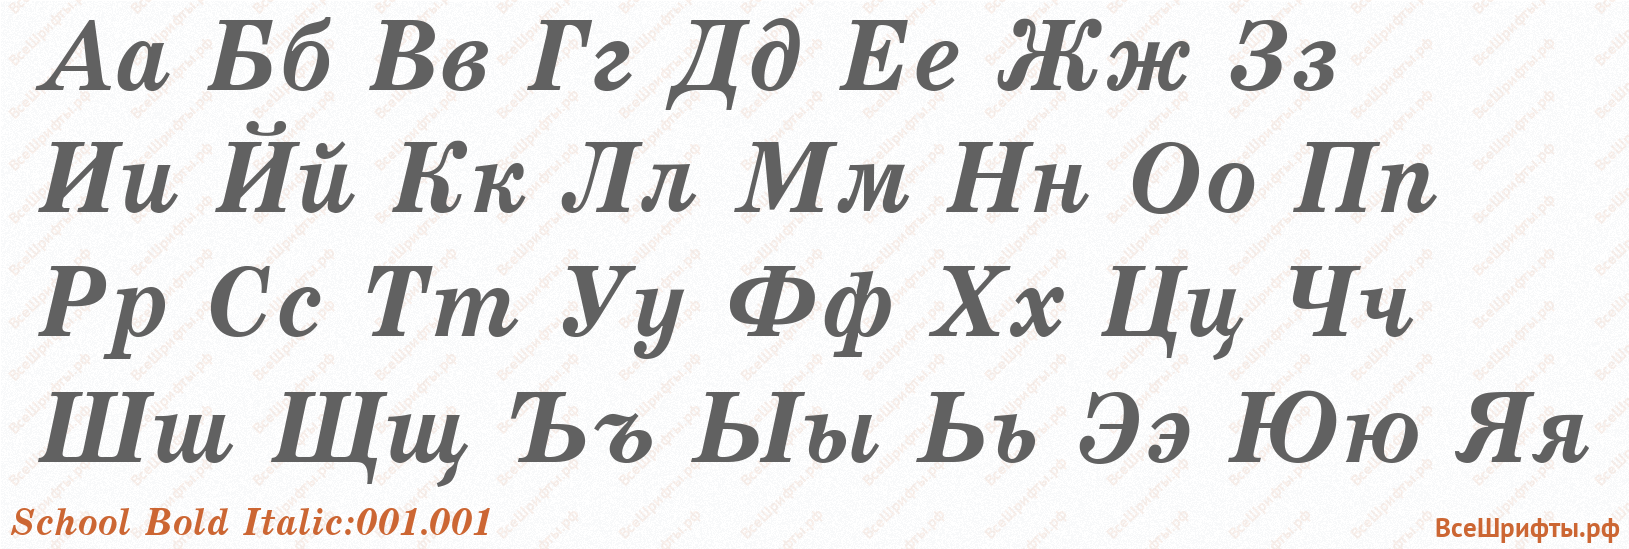 Шрифт School Bold Italic:001.001 с русскими буквами